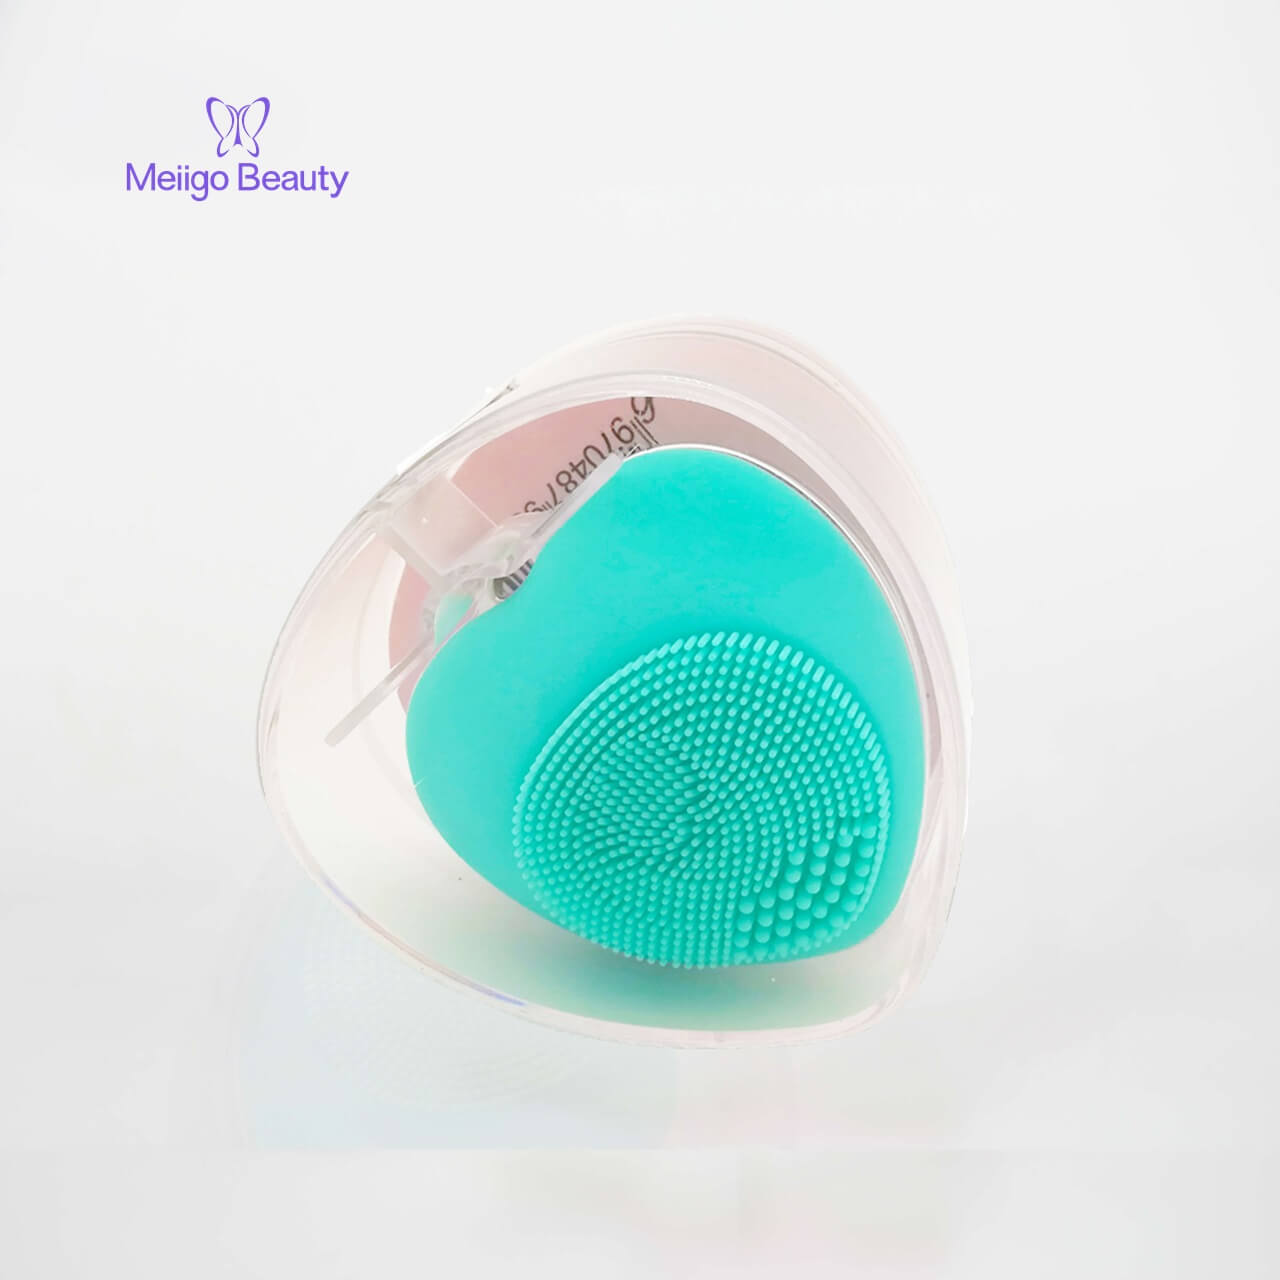 Meiigo beauty heart shape facial brush BR 002 6 - Facial cleansing brush mini silicone sonic face massager  BR-002